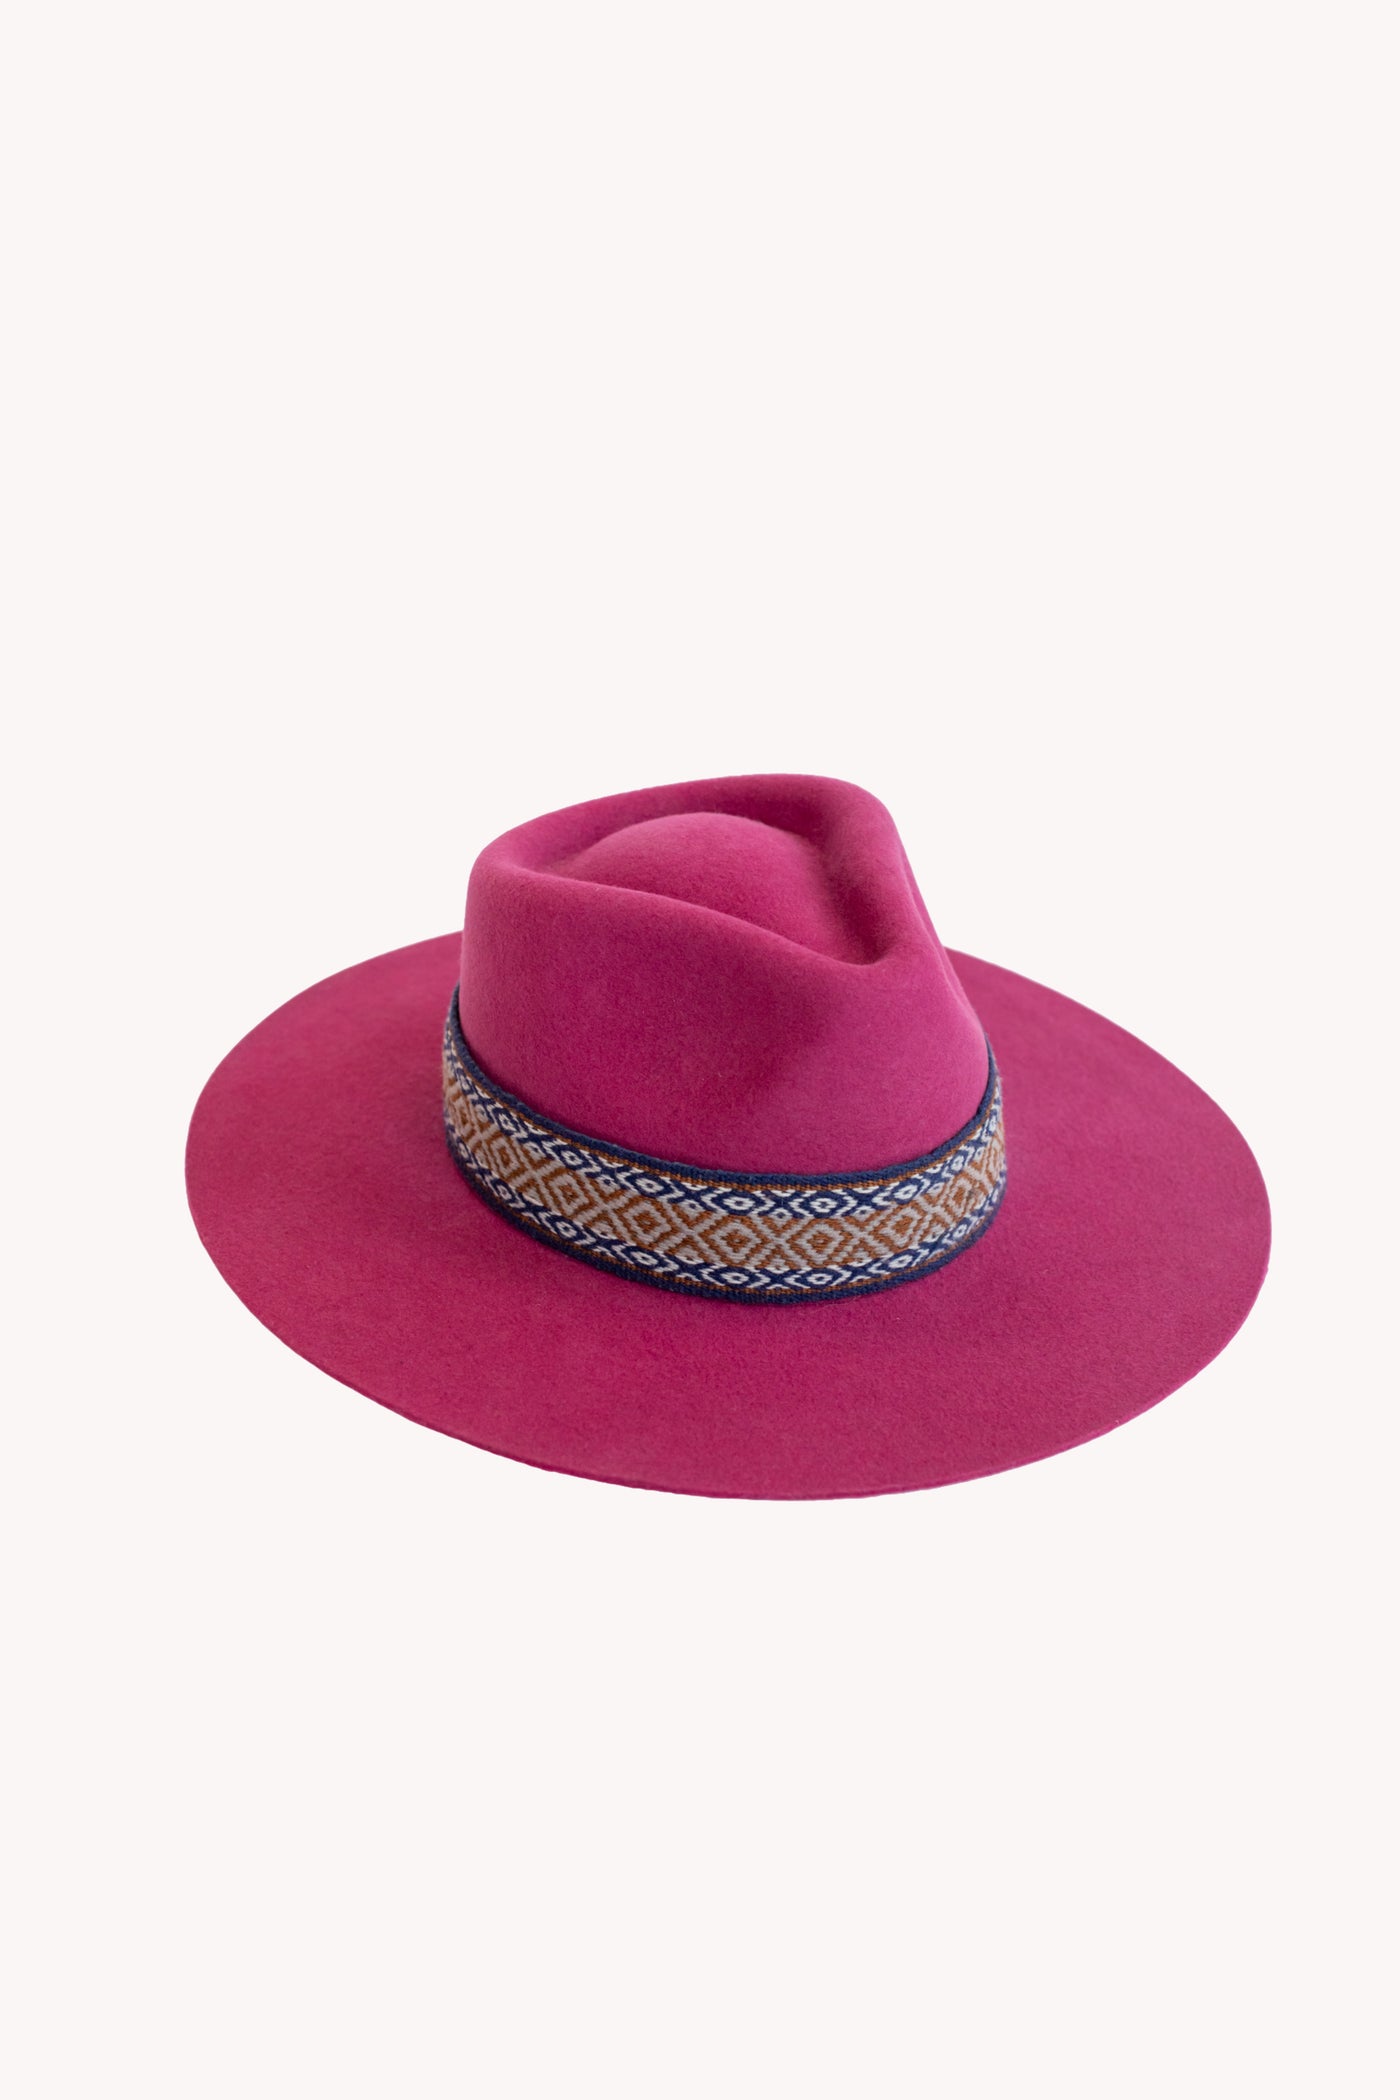 Pink western style Peruvian hat